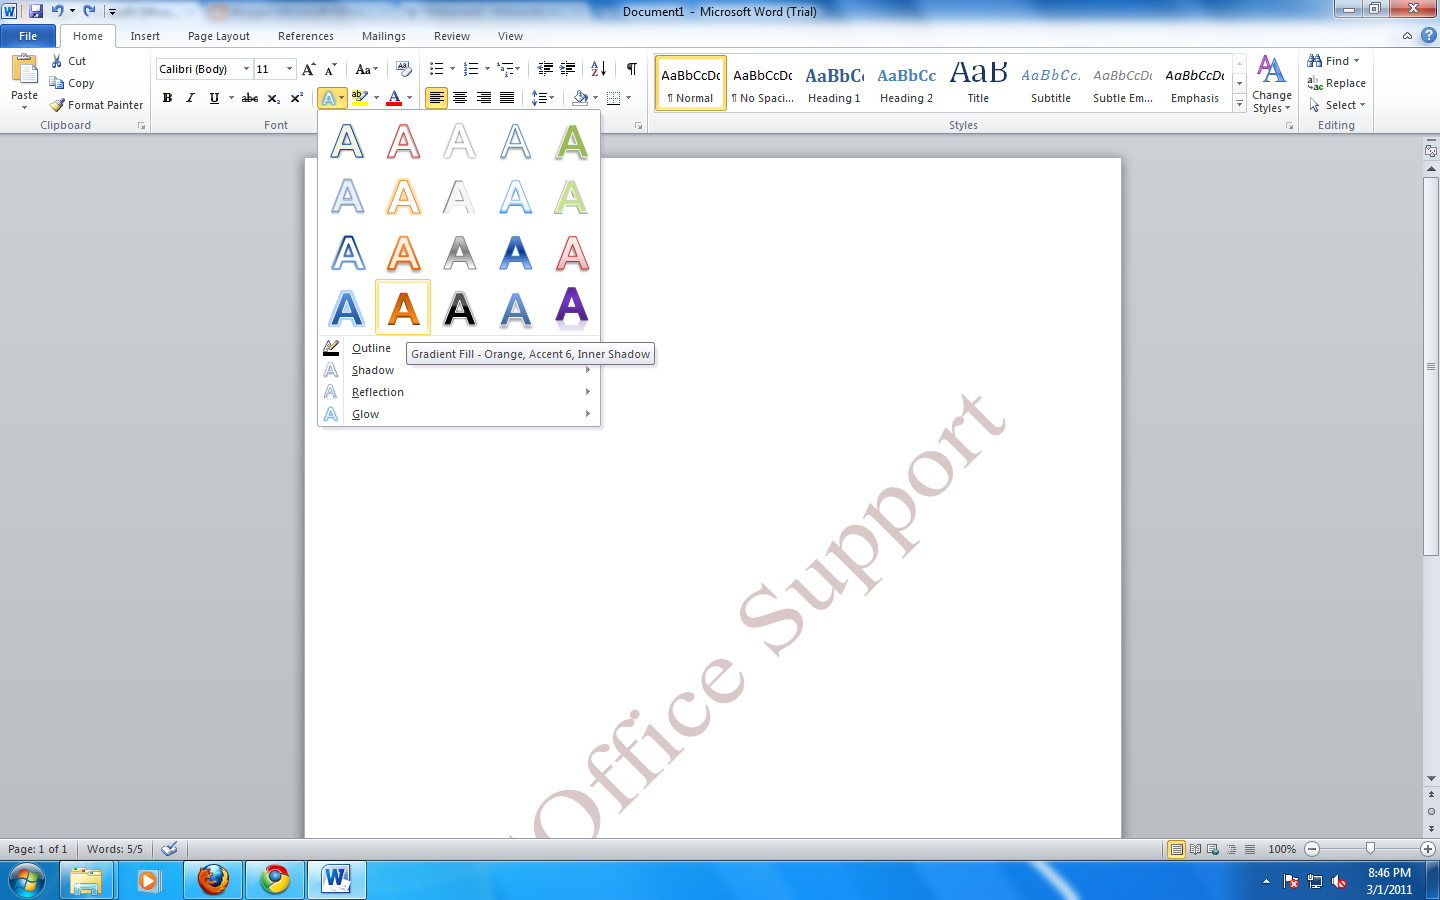 Microsoft Word 2010 Word Art Menu (2010)